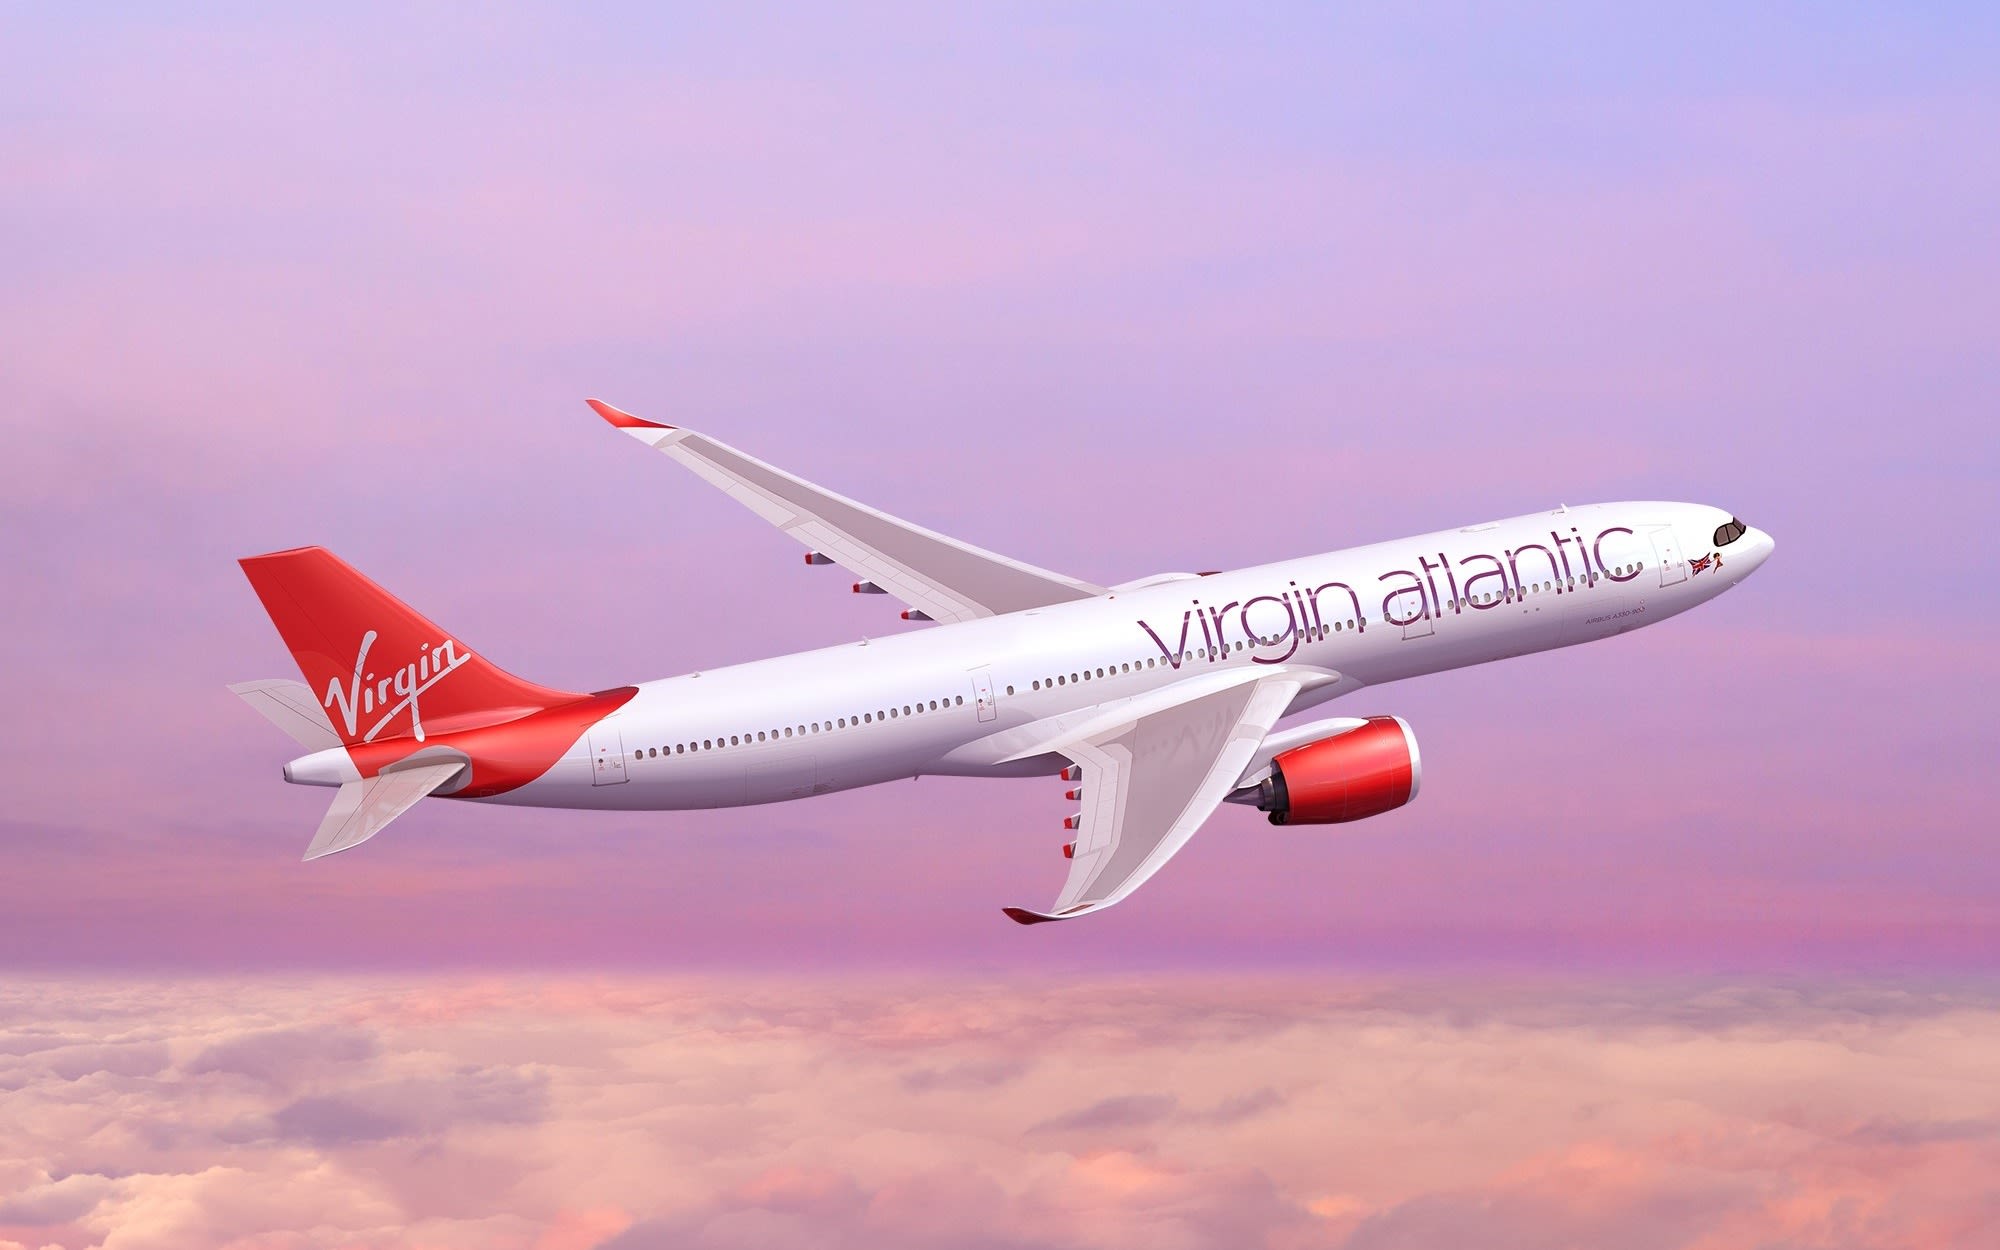 A render of a Virgin Atlantic Airbus A330neo